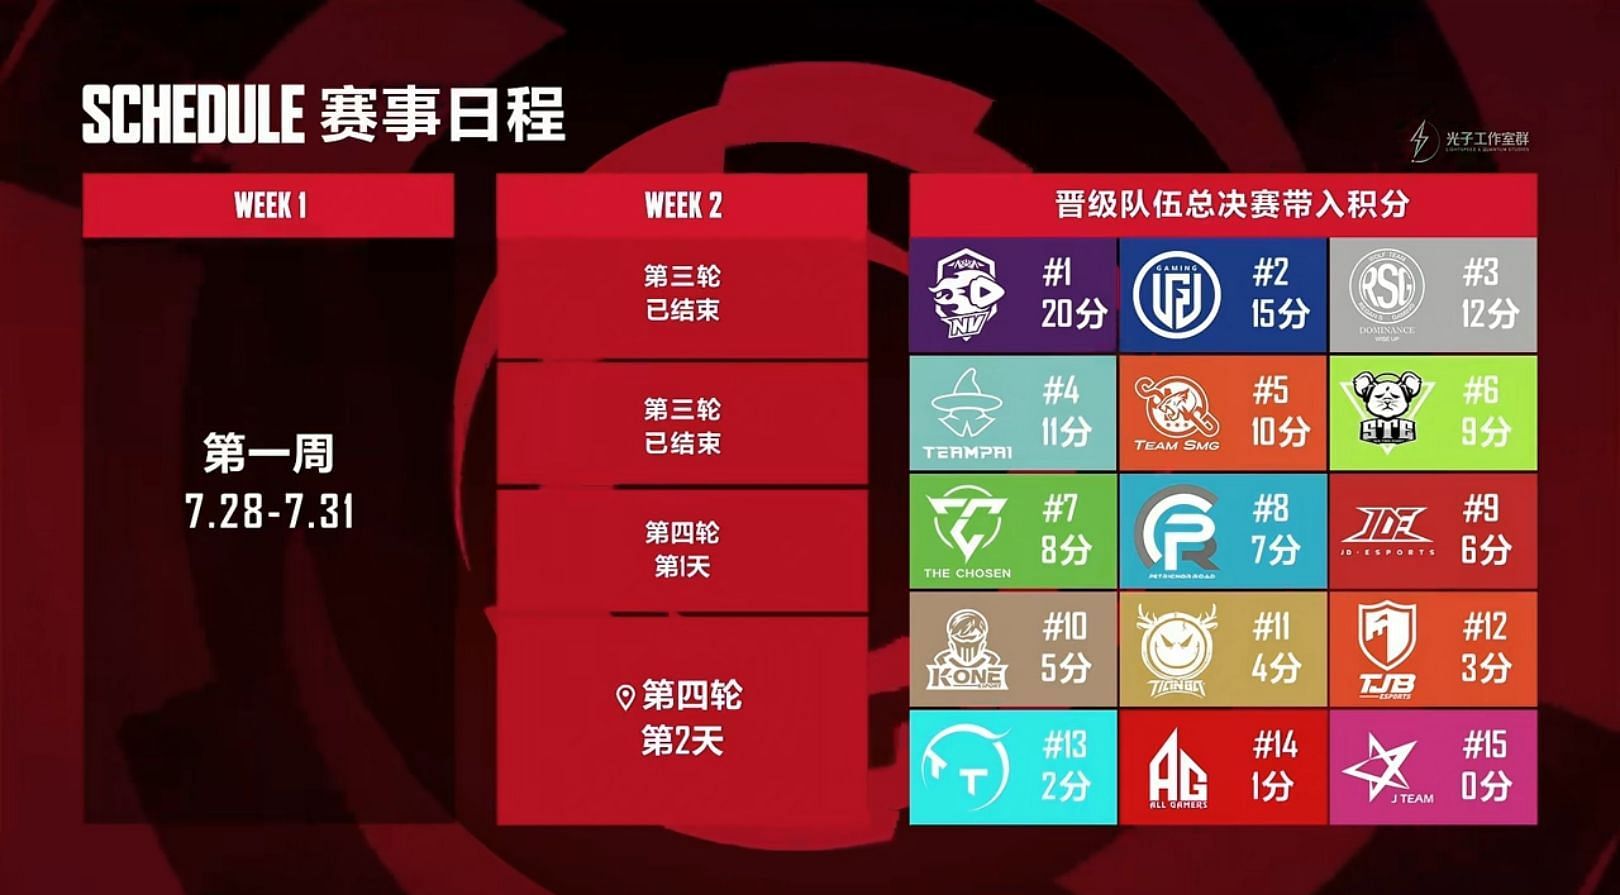 Qualified Teams and bonus points (Image via Tencent)